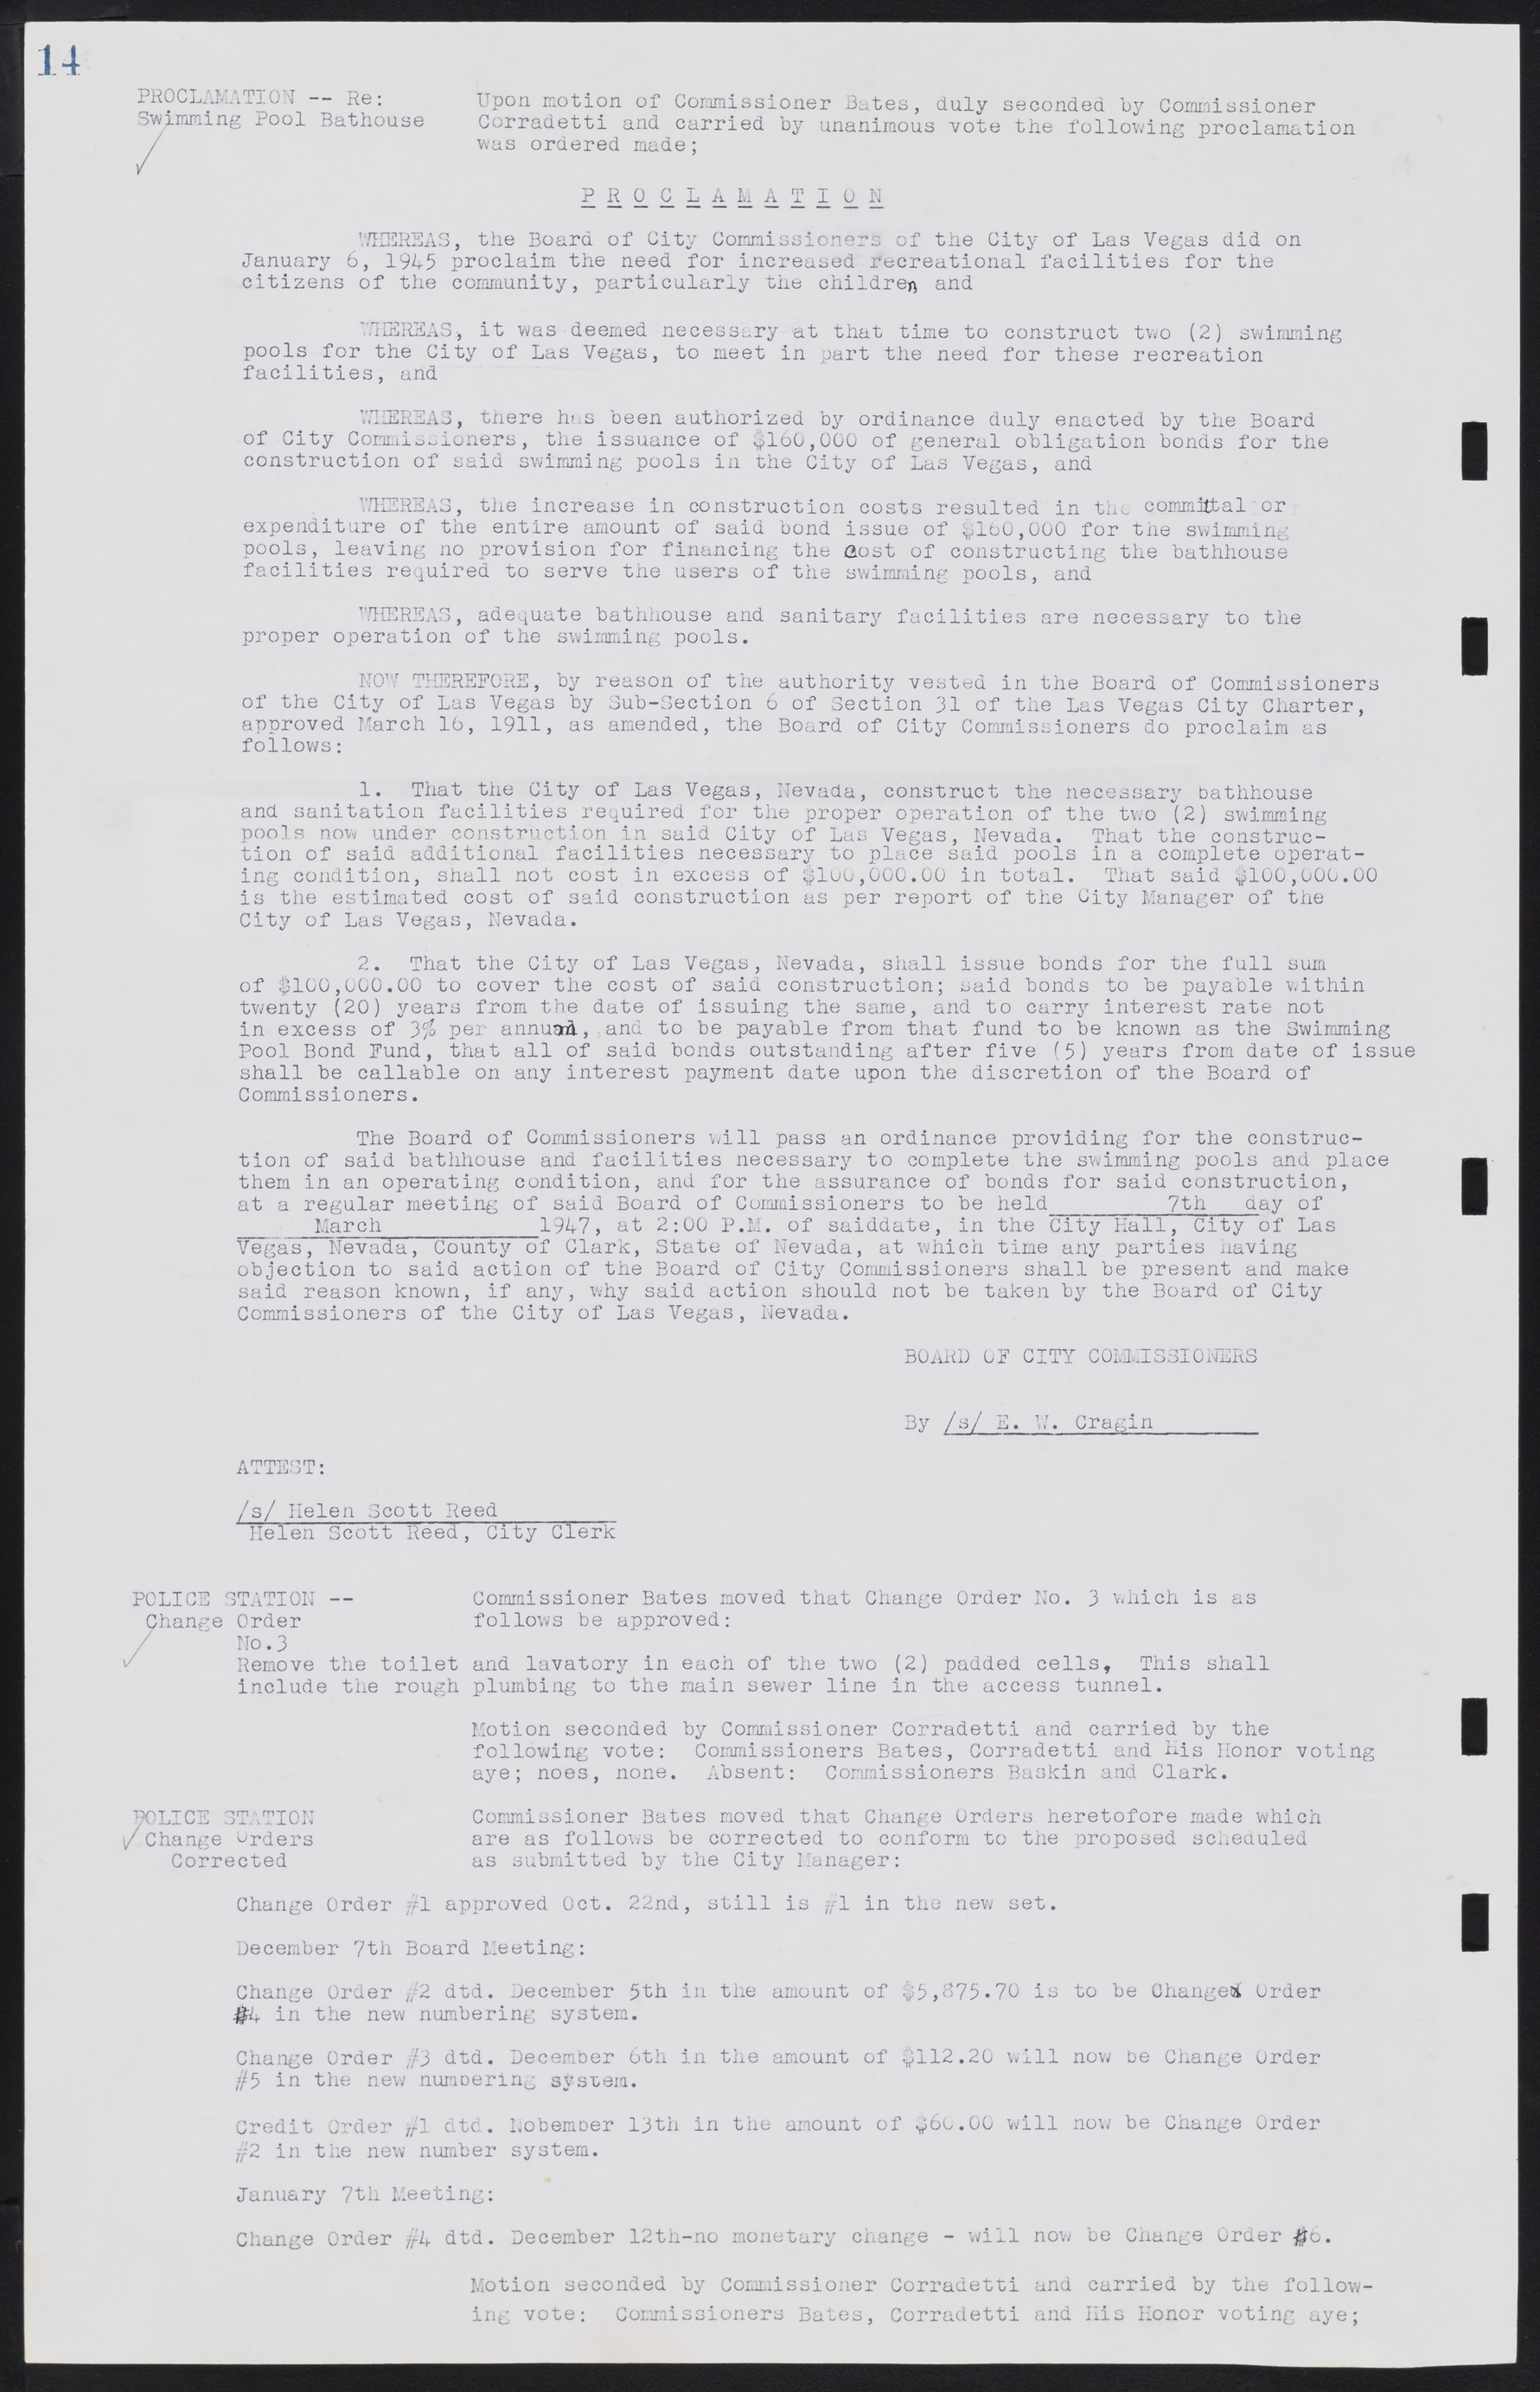 Las Vegas City Commission Minutes, January 7, 1947 to October 26, 1949, lvc000006-22